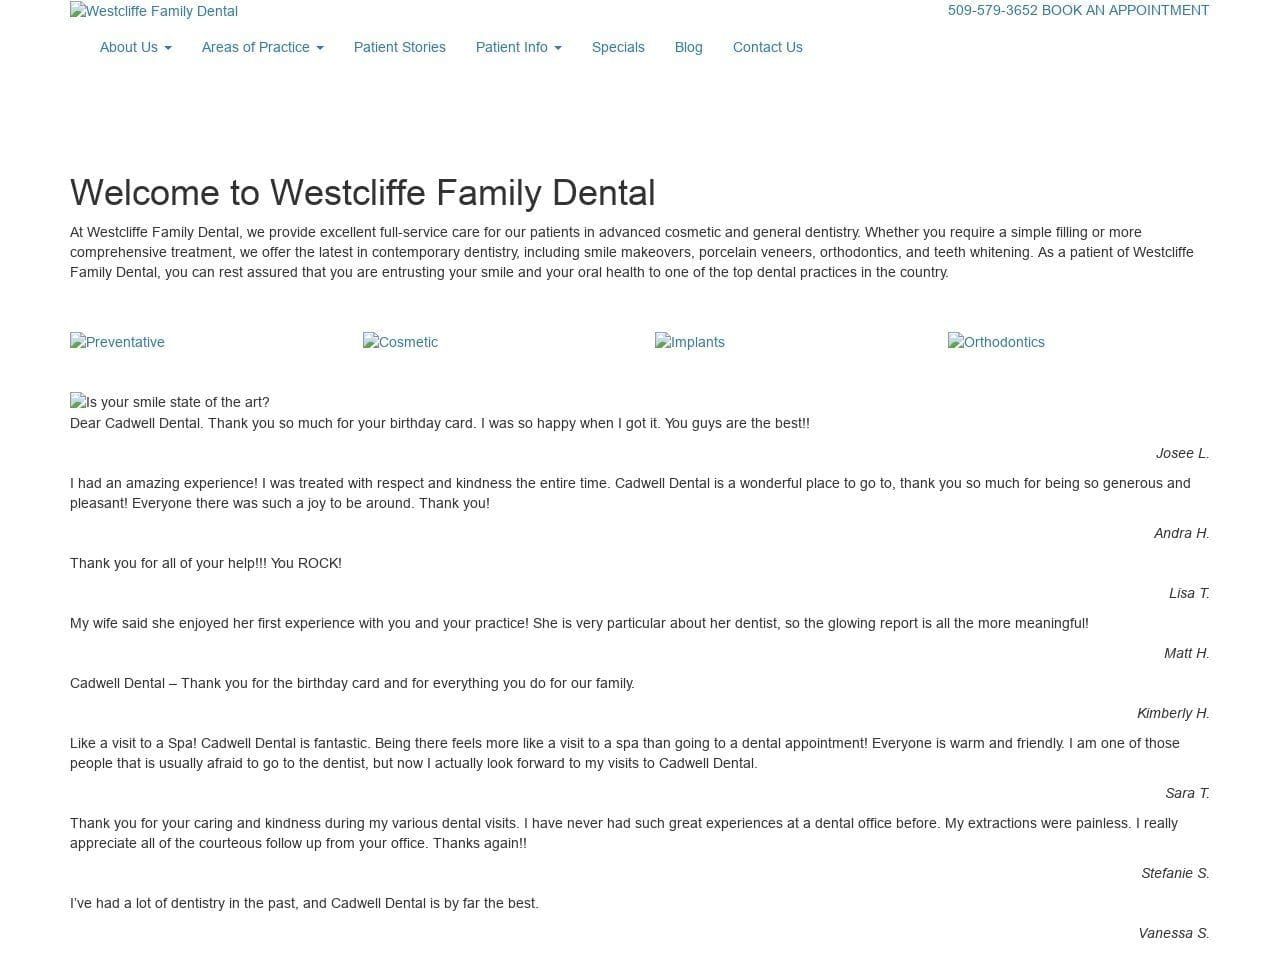 Cadwell Dental Website Screenshot from cadwelldental.com